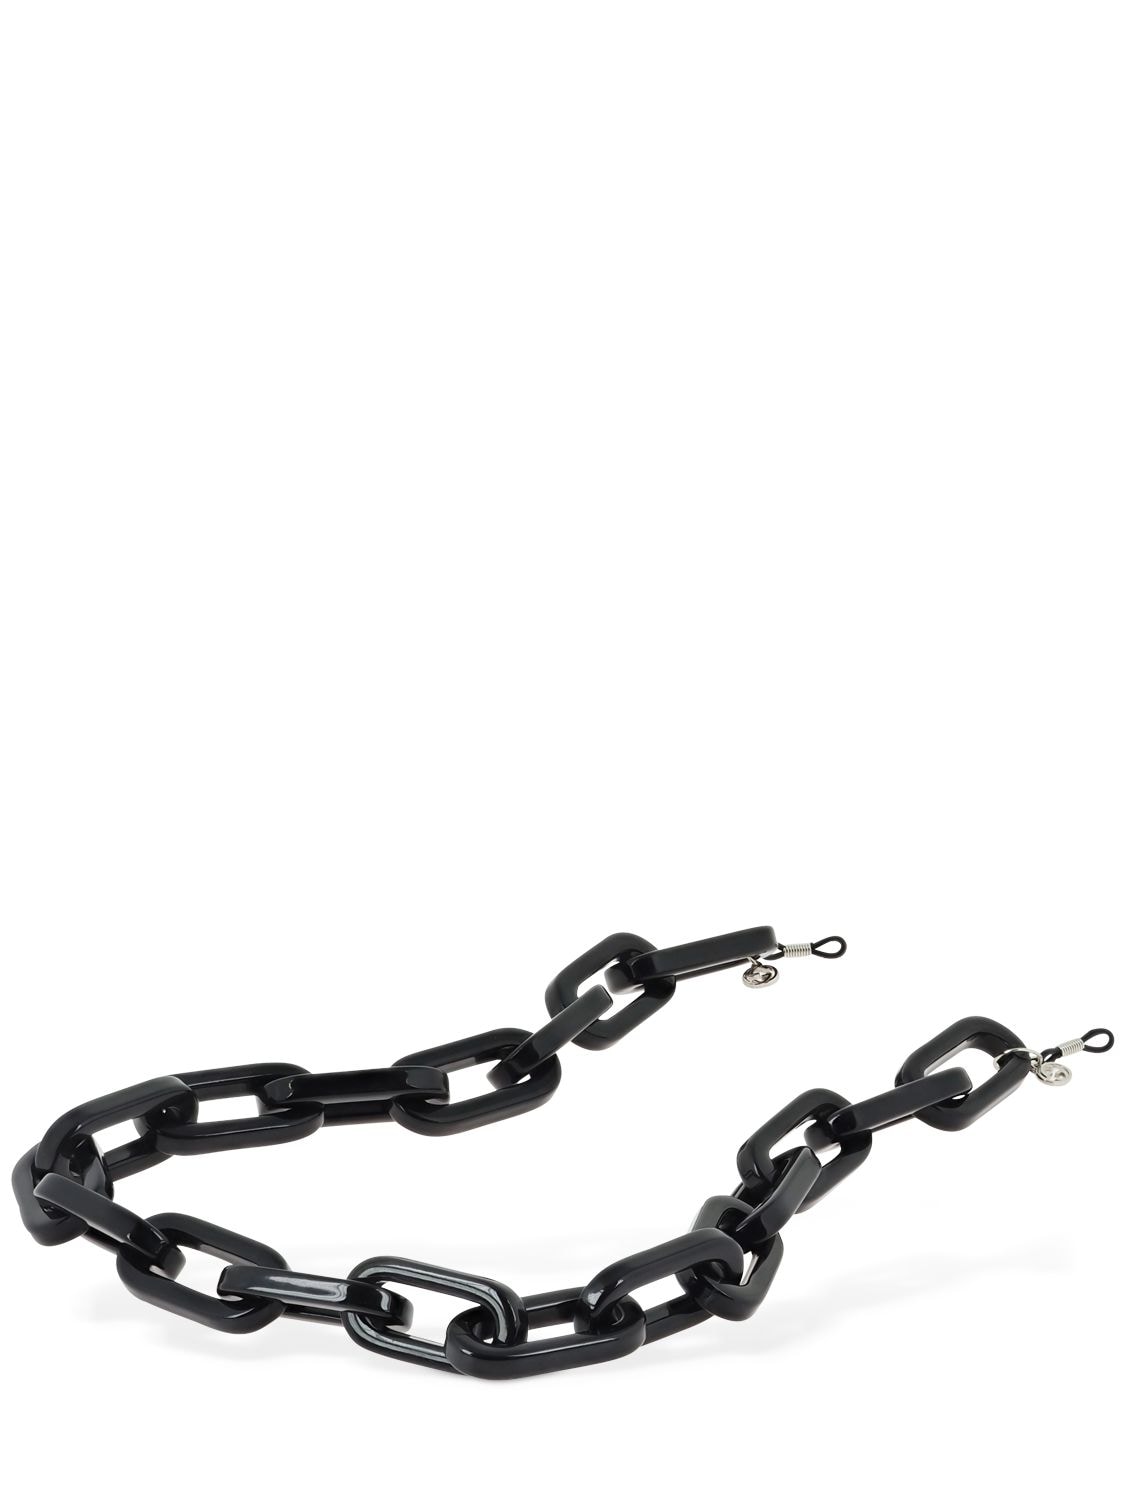 Gucci Glasses Chain W/ Interlocking G Detail In Black